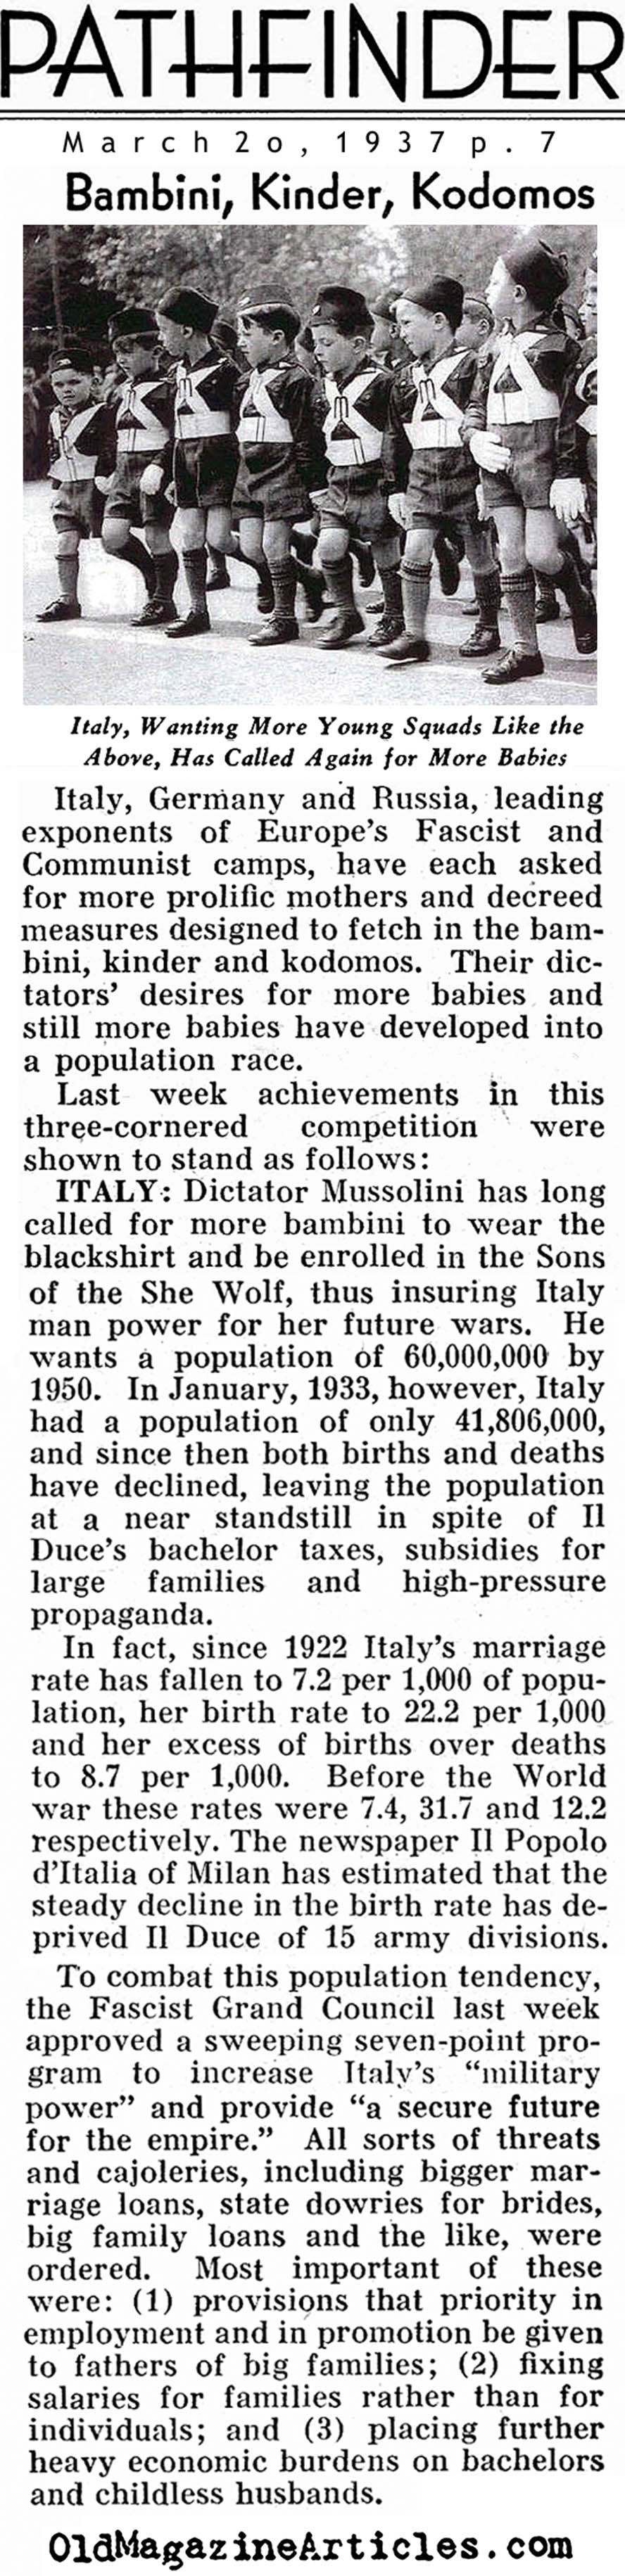 More Babies, Please (Pathfinder Magazine, 1937)